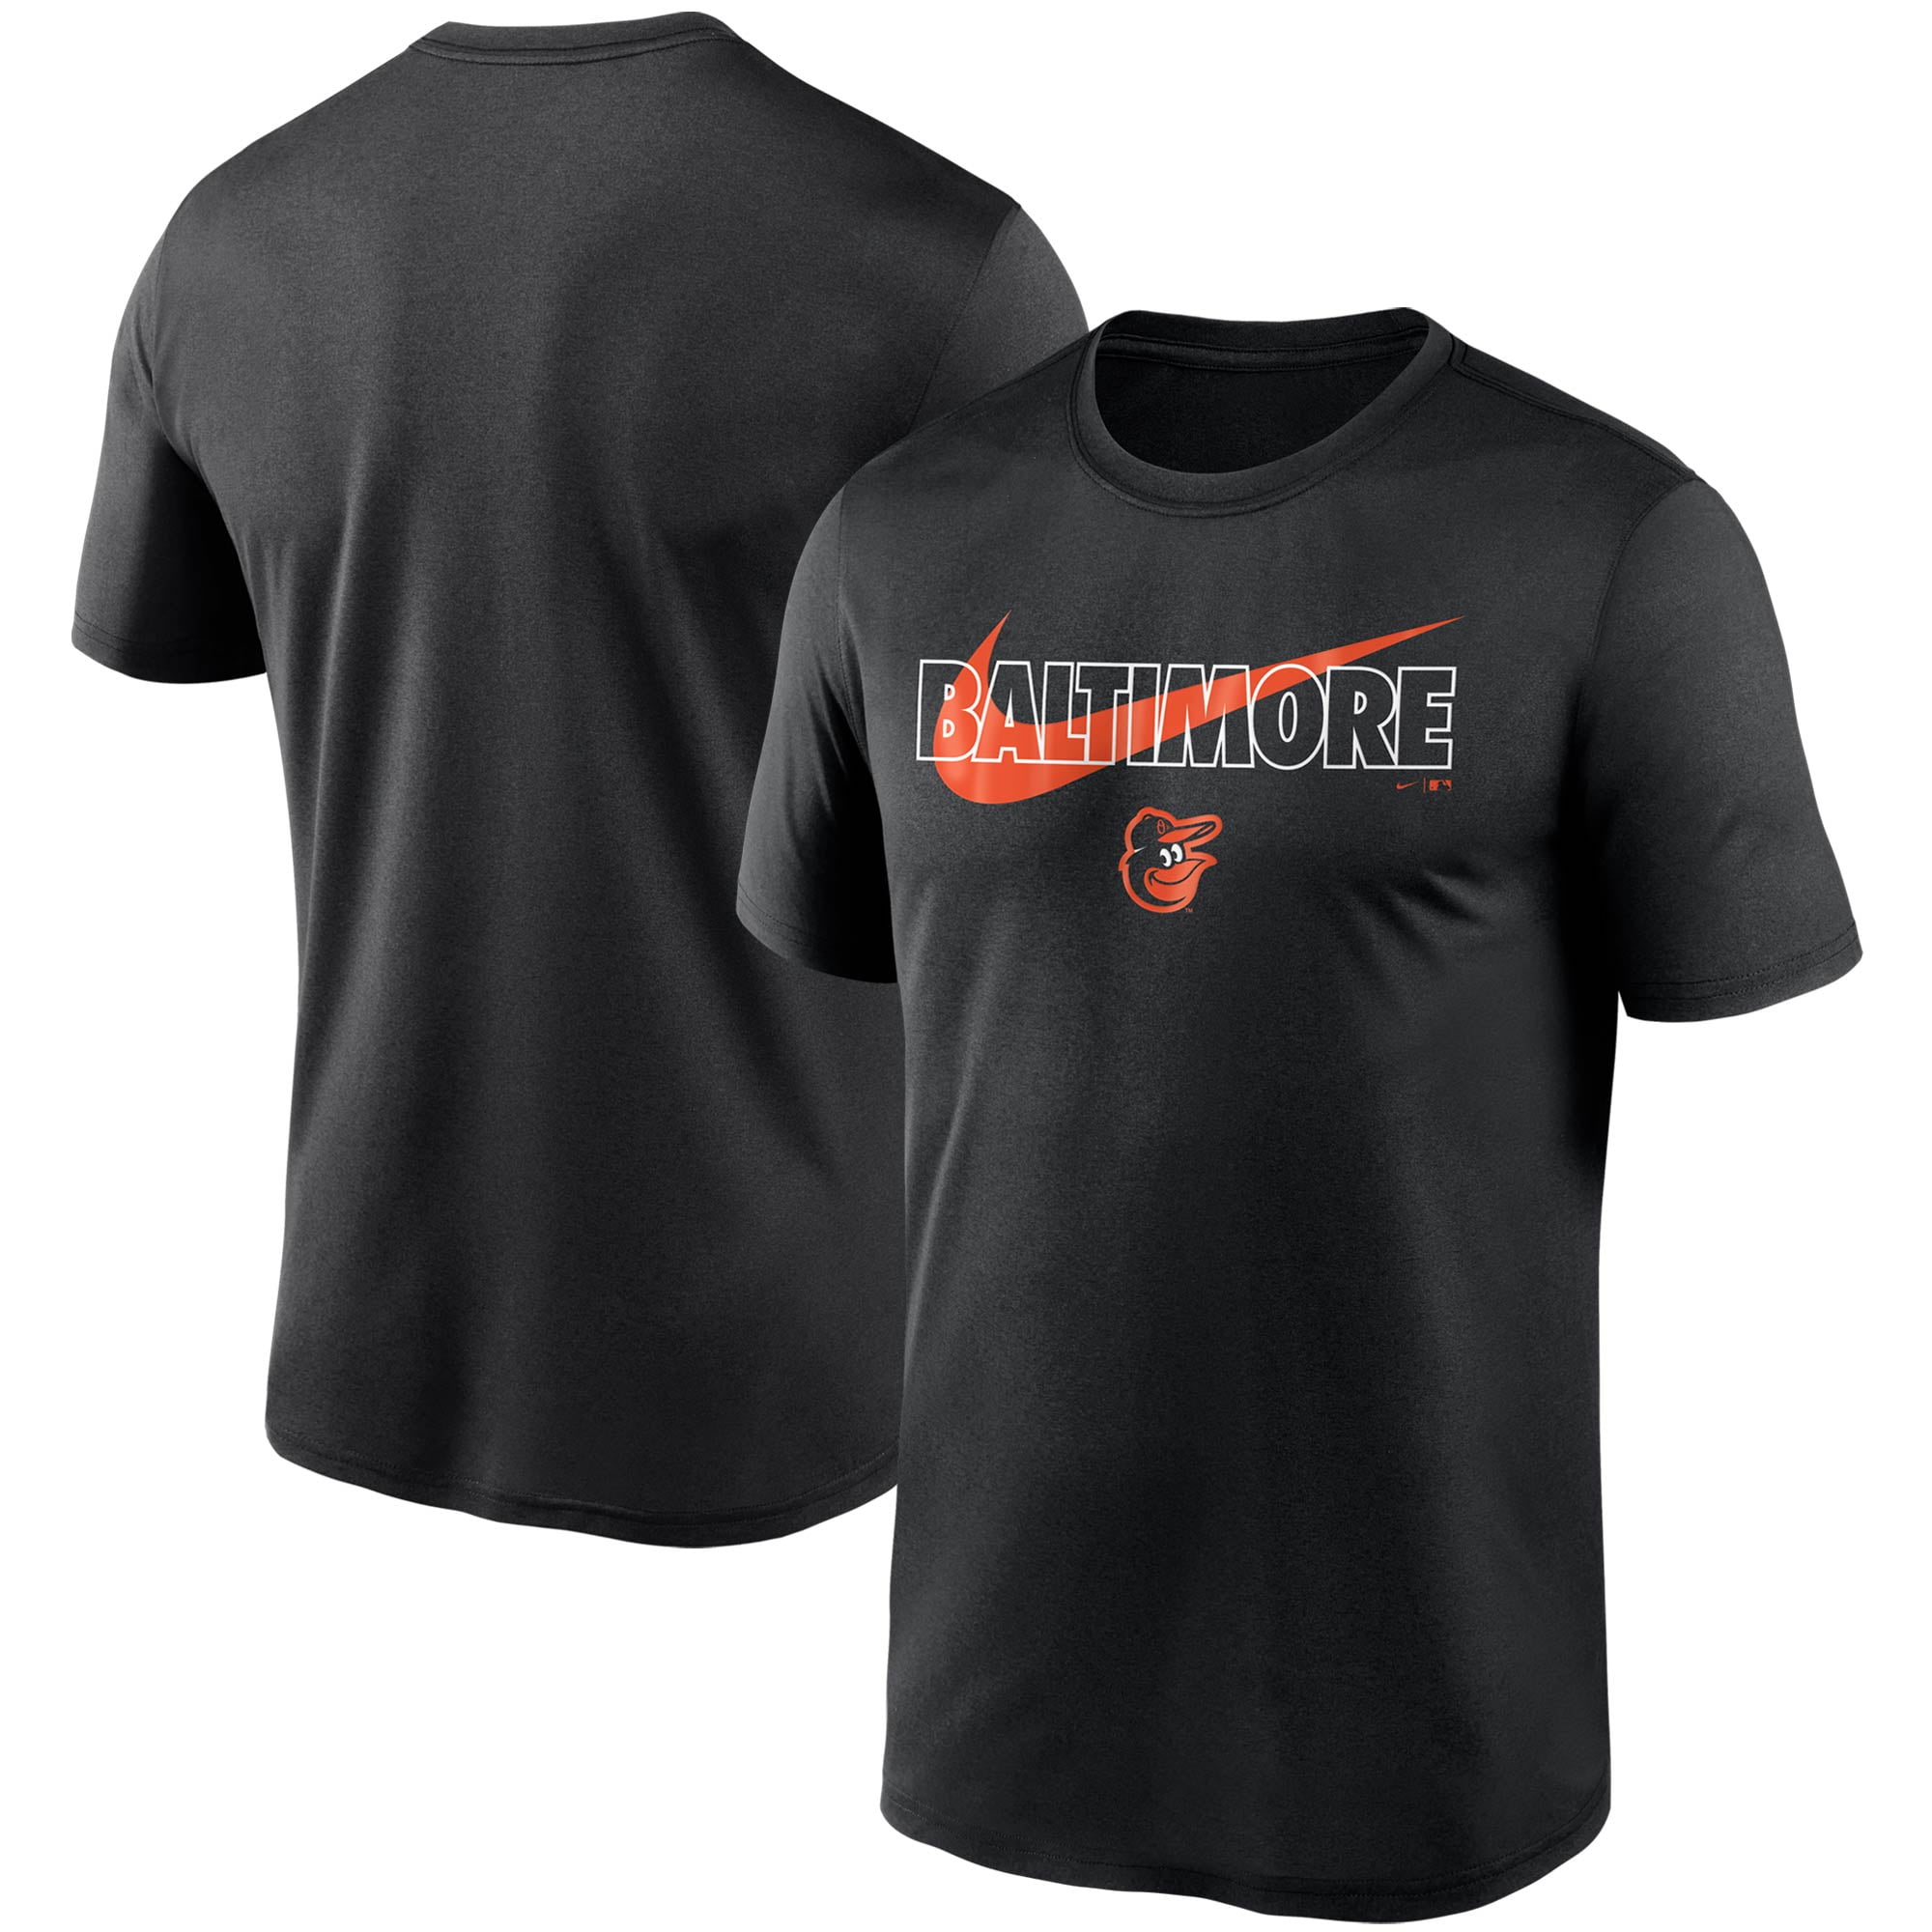 خزانة جانبية Baltimore Orioles Nike Heathered Black Sideline Legend Velocity Travel Performance T-Shirt تقشير البارد للوجه